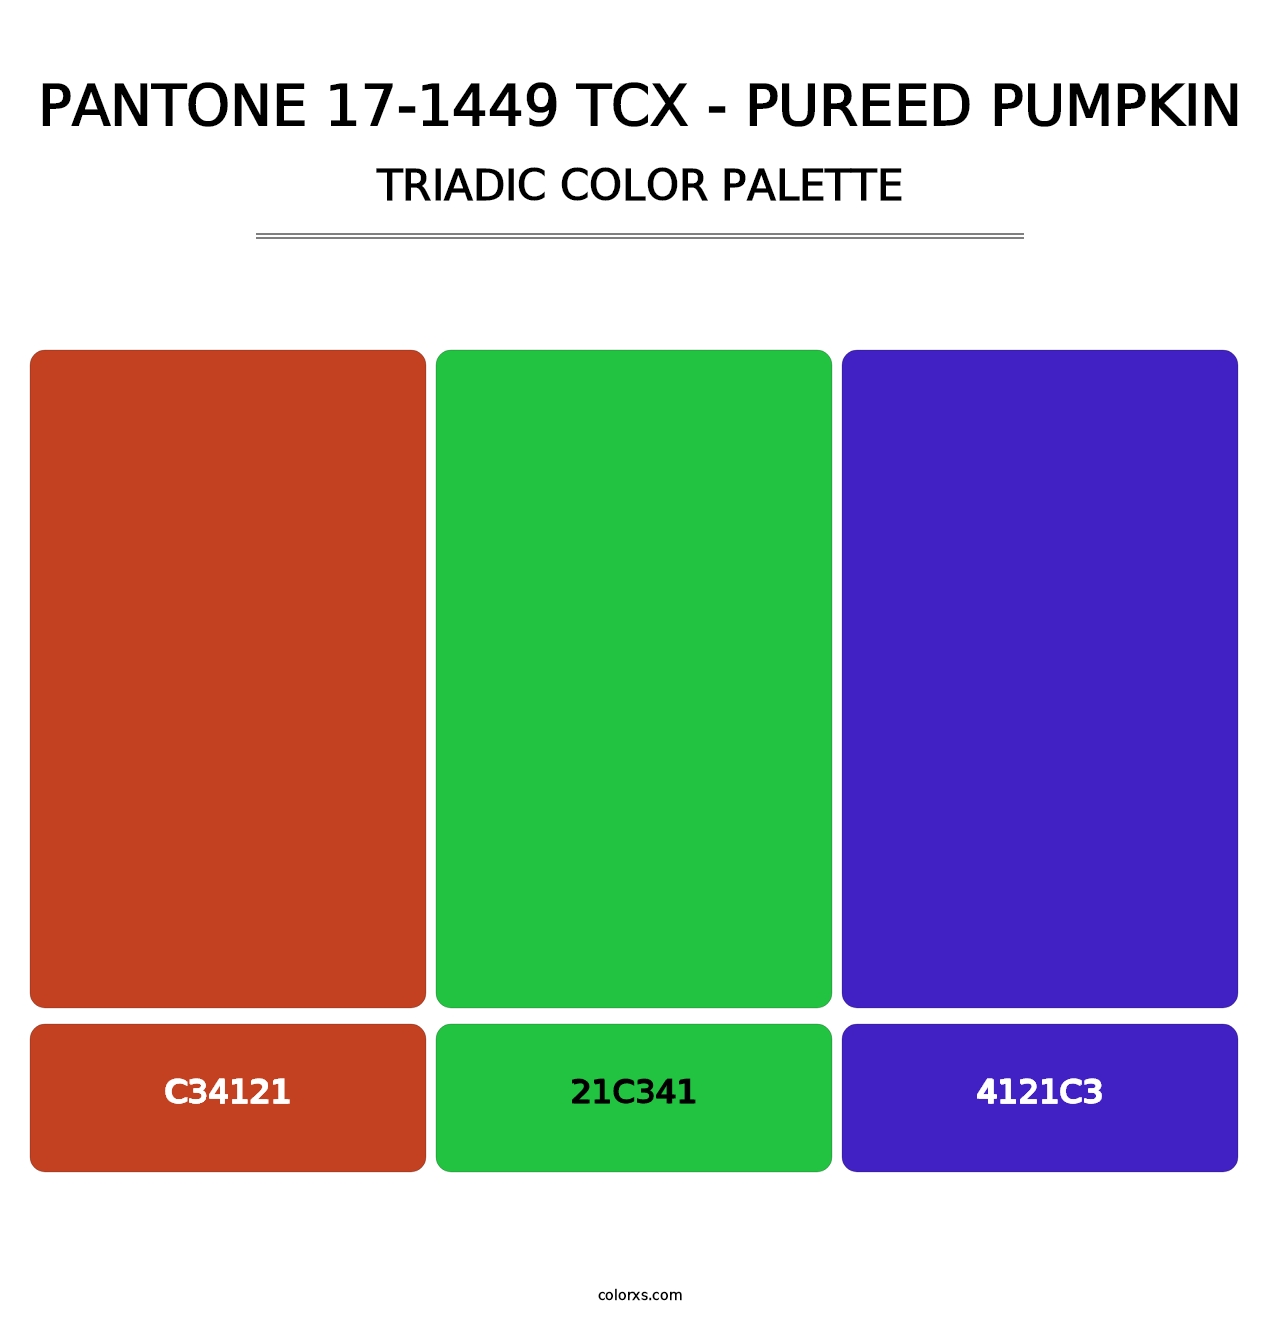 PANTONE 17-1449 TCX - Pureed Pumpkin - Triadic Color Palette